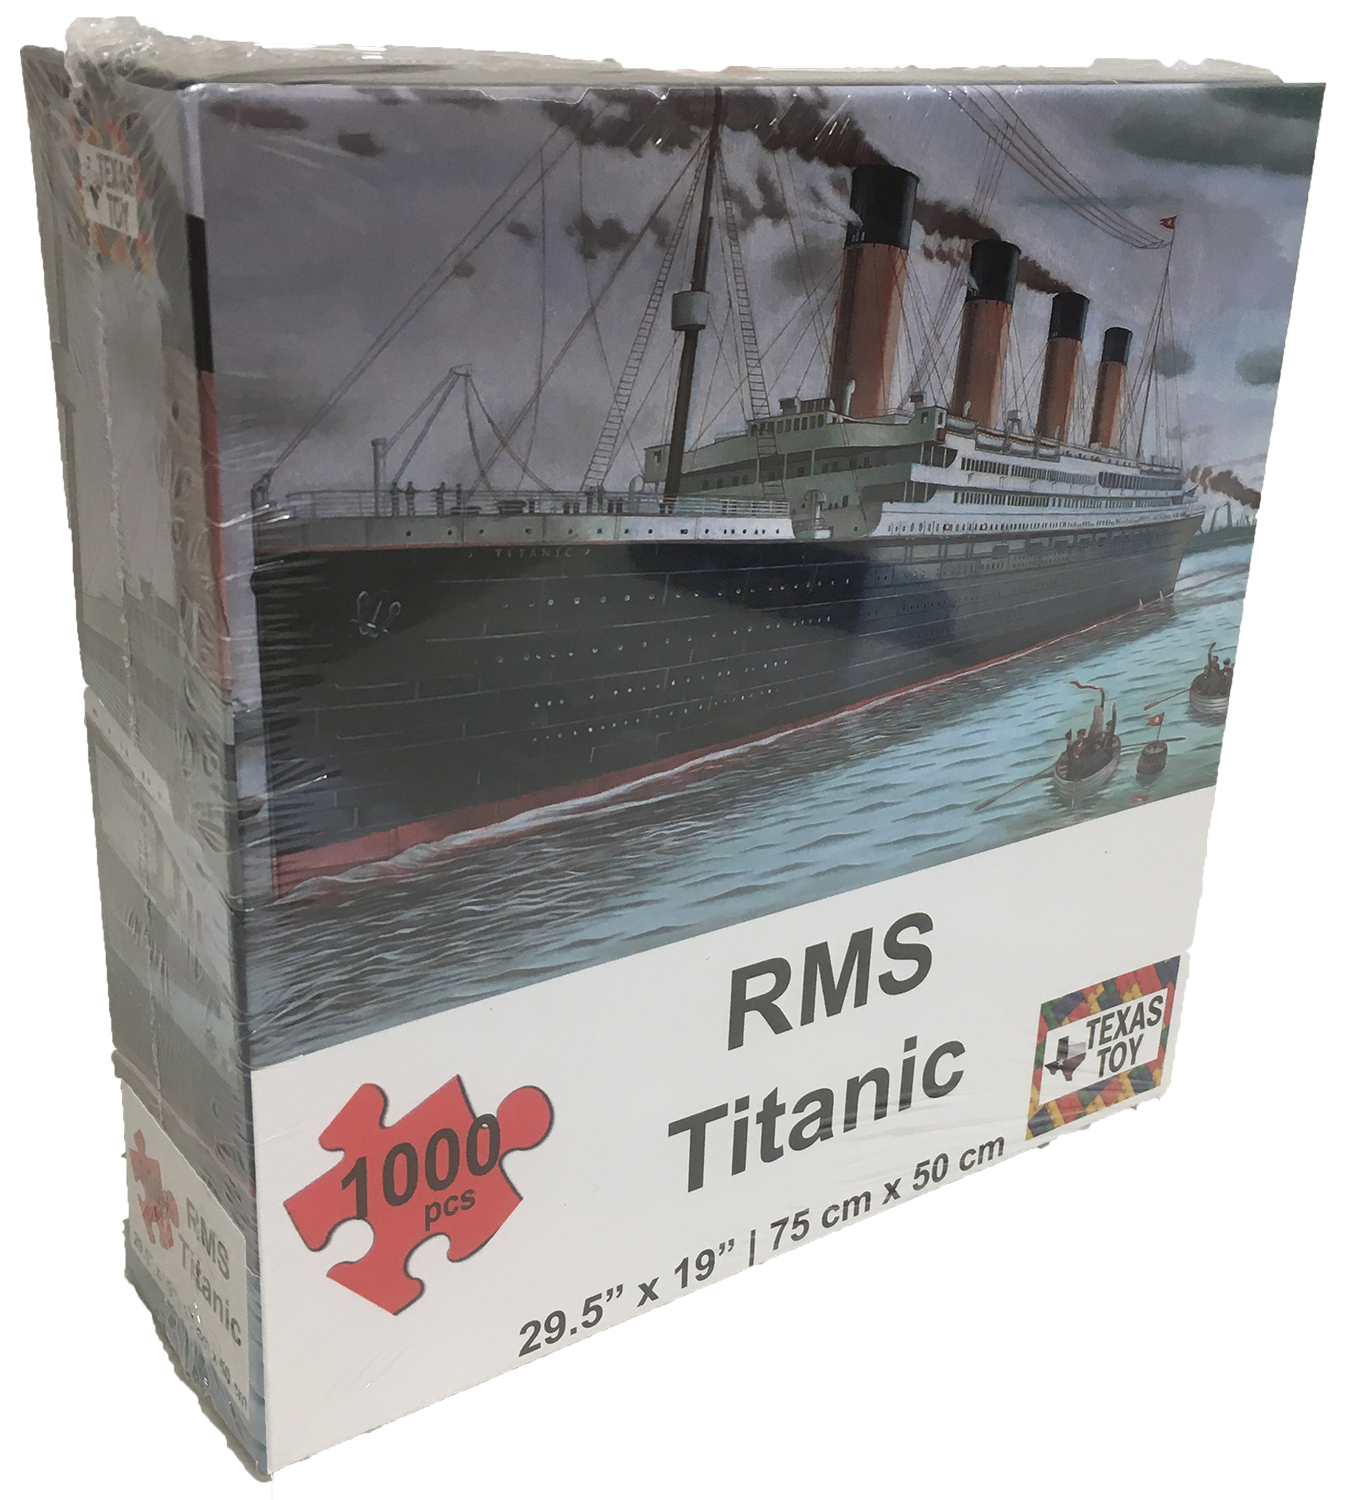 RMS Titanic Ship Cardboard Puzzle 1000-pc 2mm